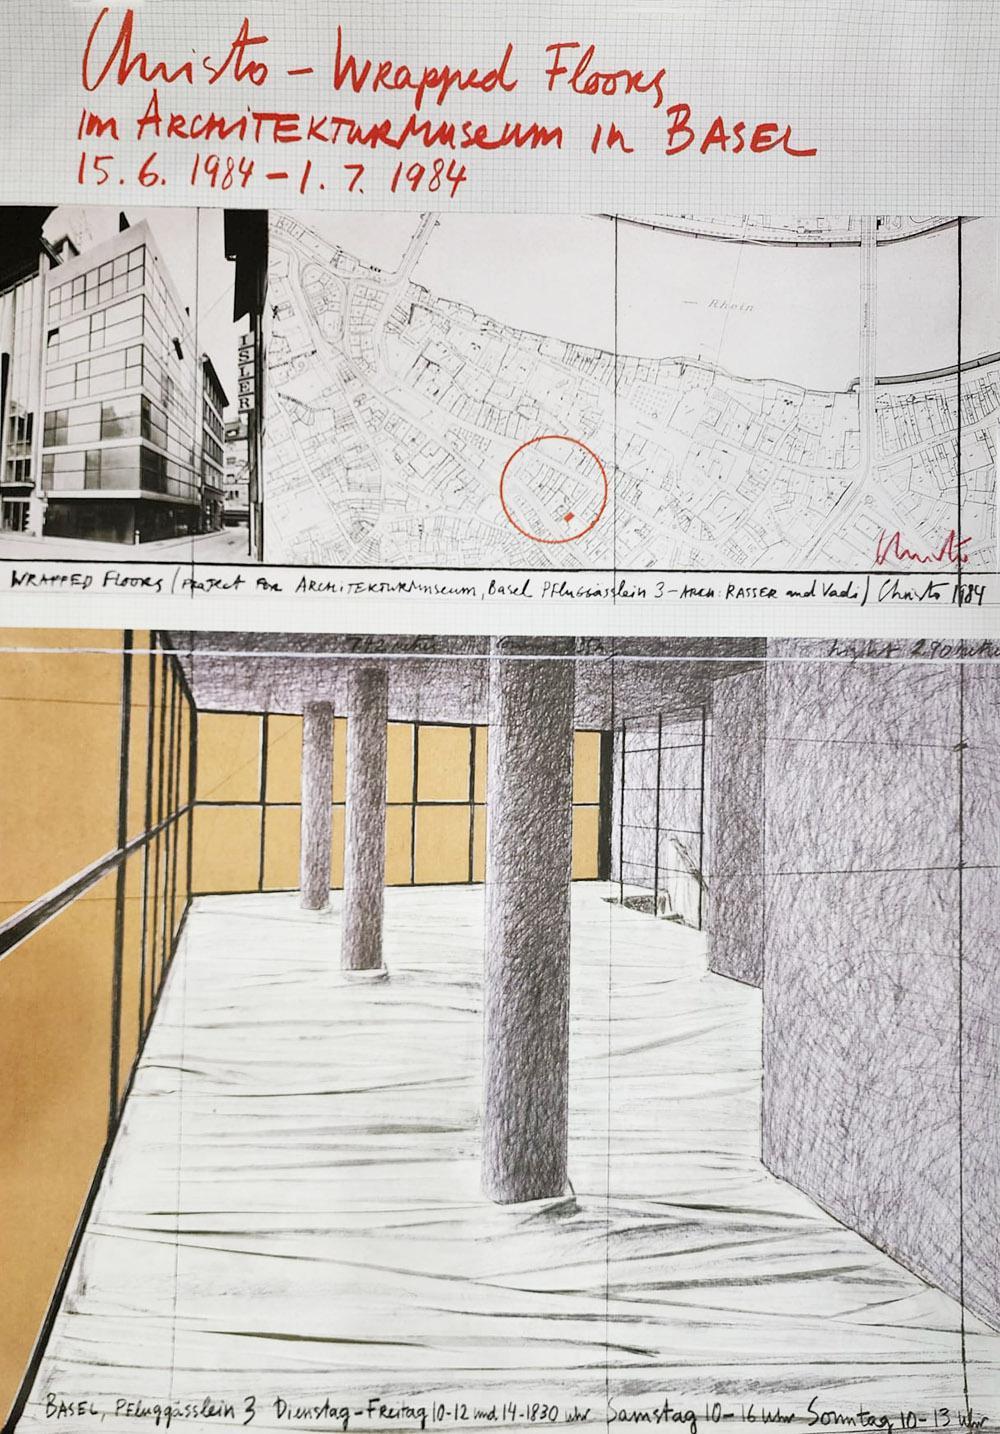 Christo Interior Print – CHRISTO 'WRAPPED FLOORS - 1984', handsignierte OFFSET-LITHOGRAPH